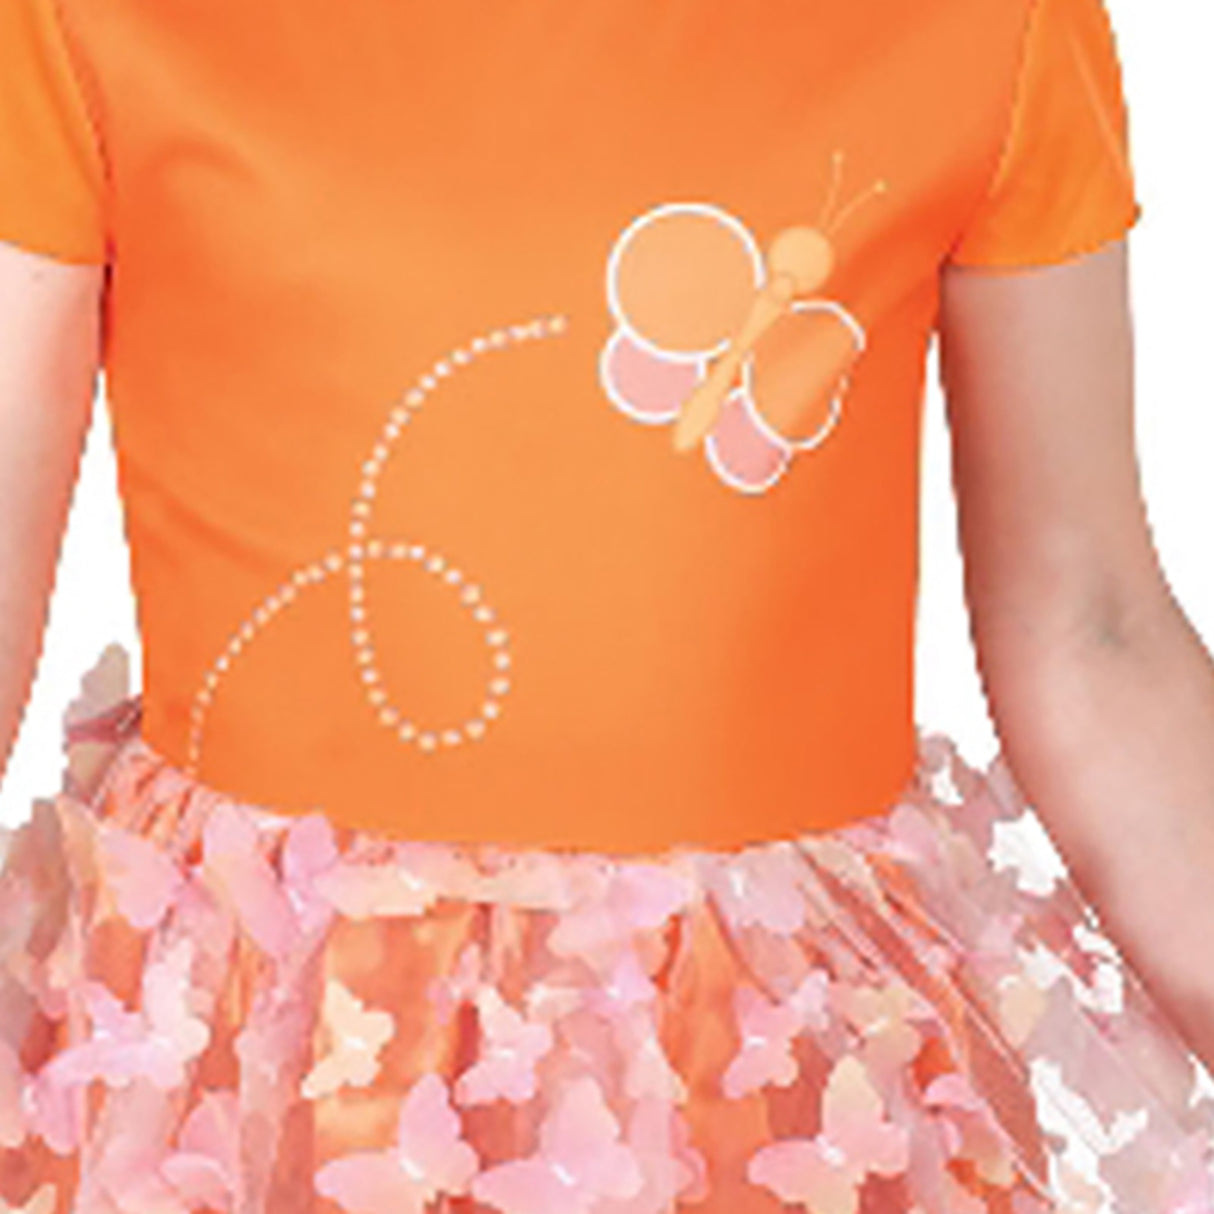 Rubies Emma Memma Deluxe Costume, Orange (3-5 years)